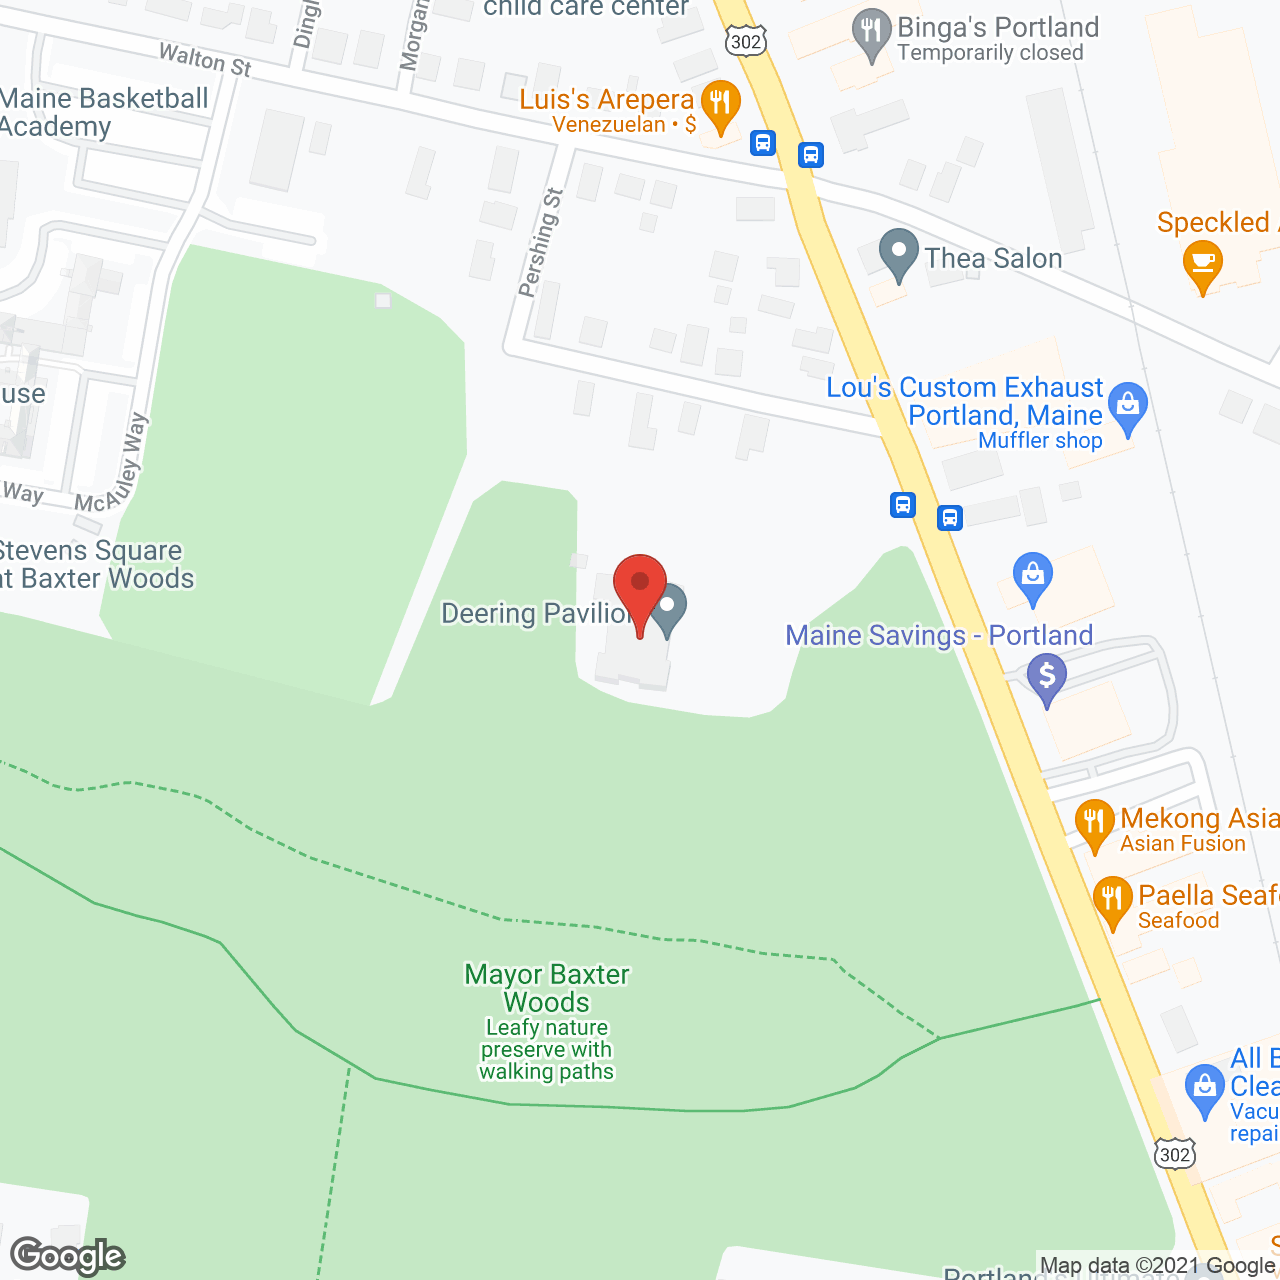 Deering Pavilion in google map